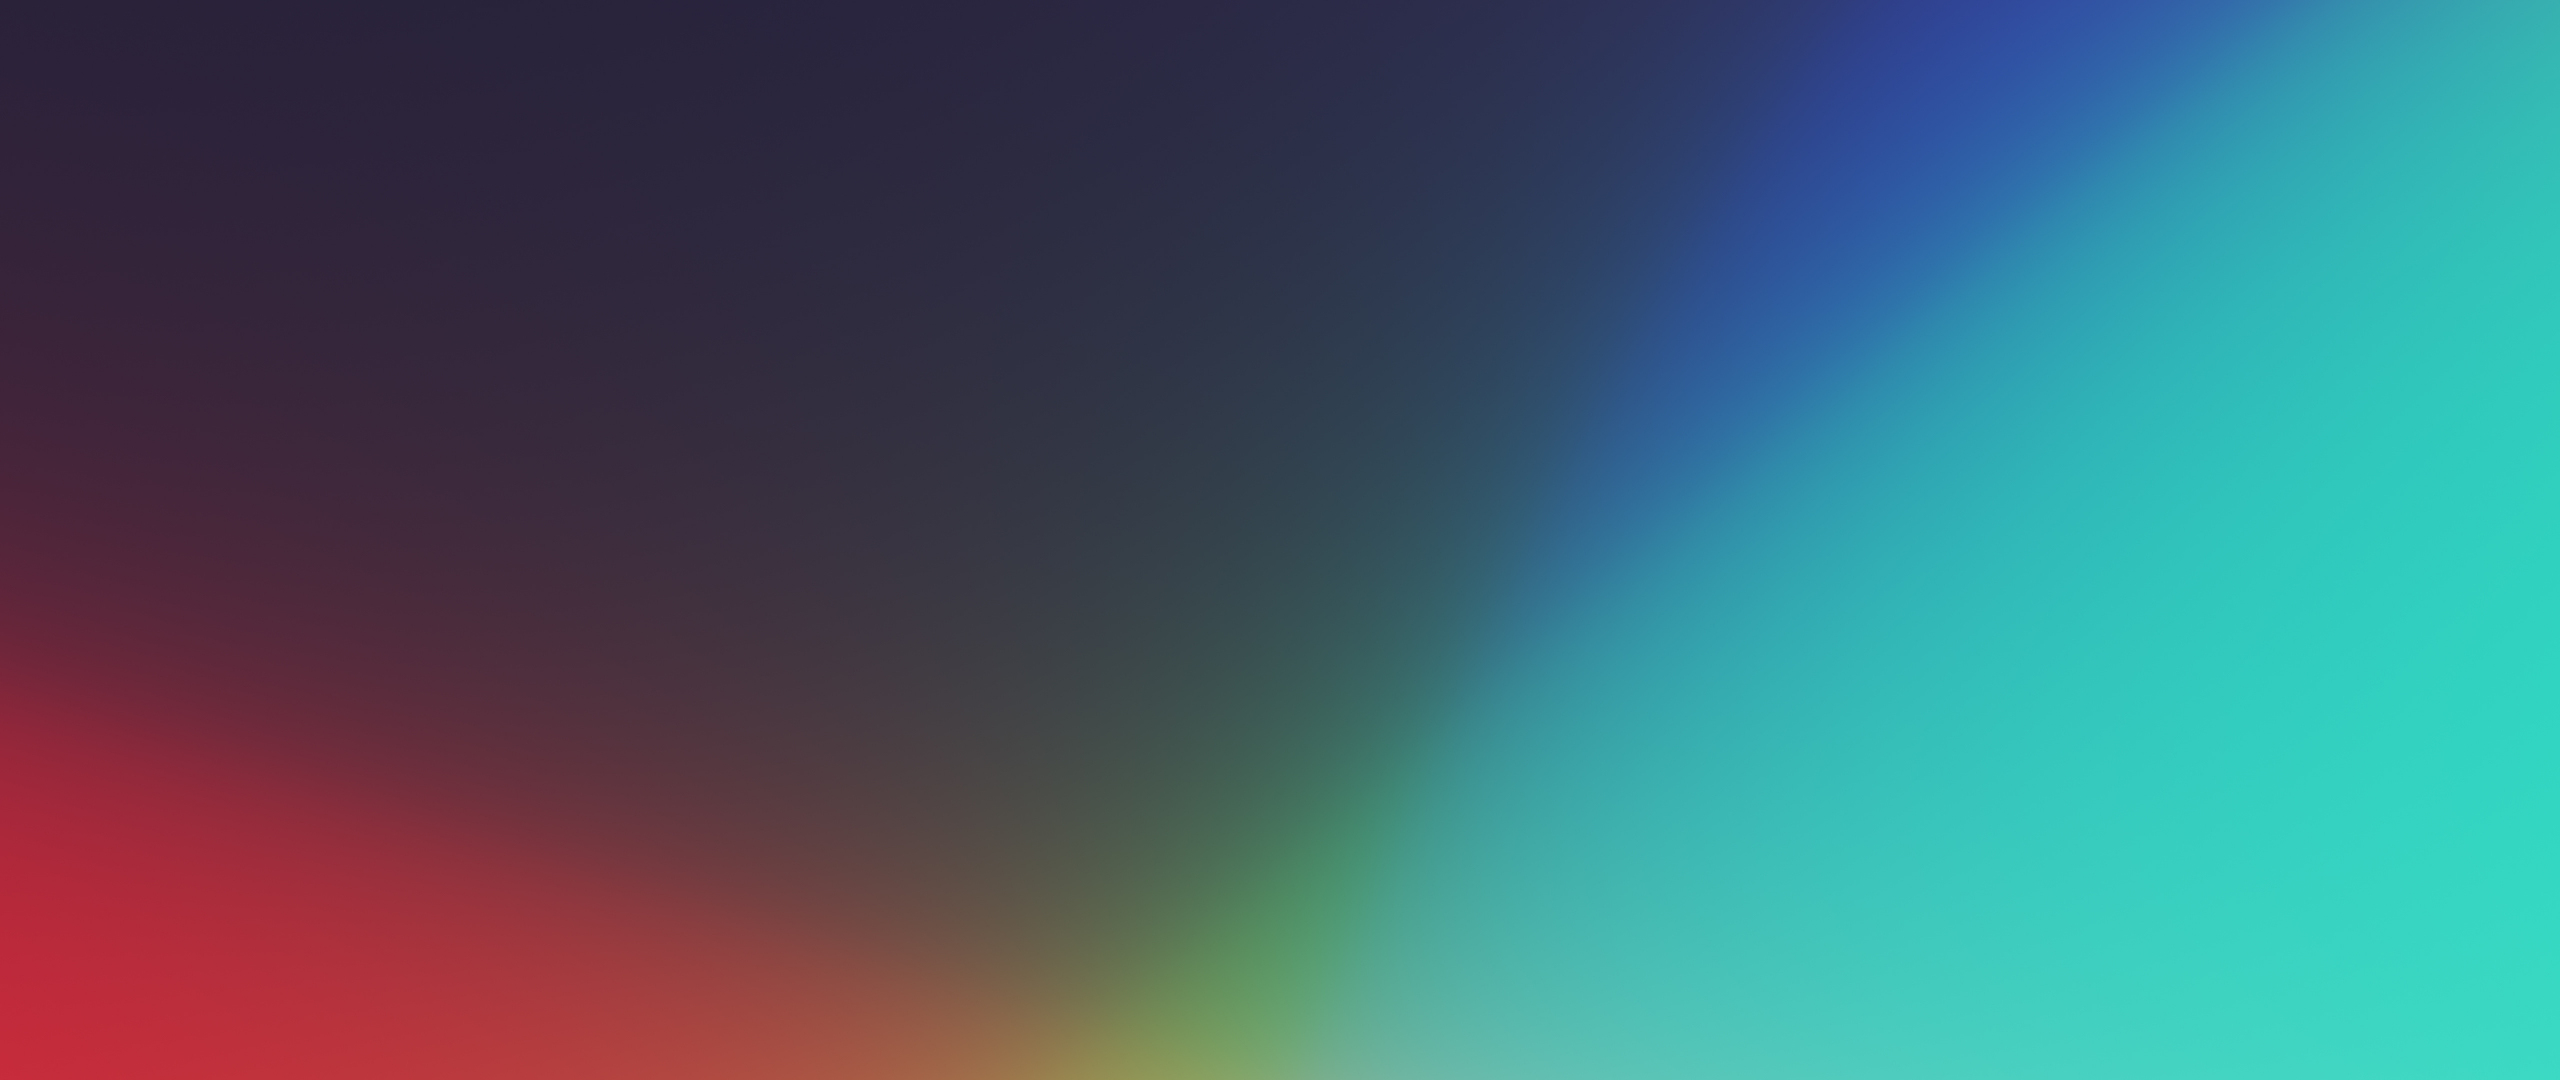 Download wallpaper 2560x1080 gradient, abstract, minimal, blur, dual ...